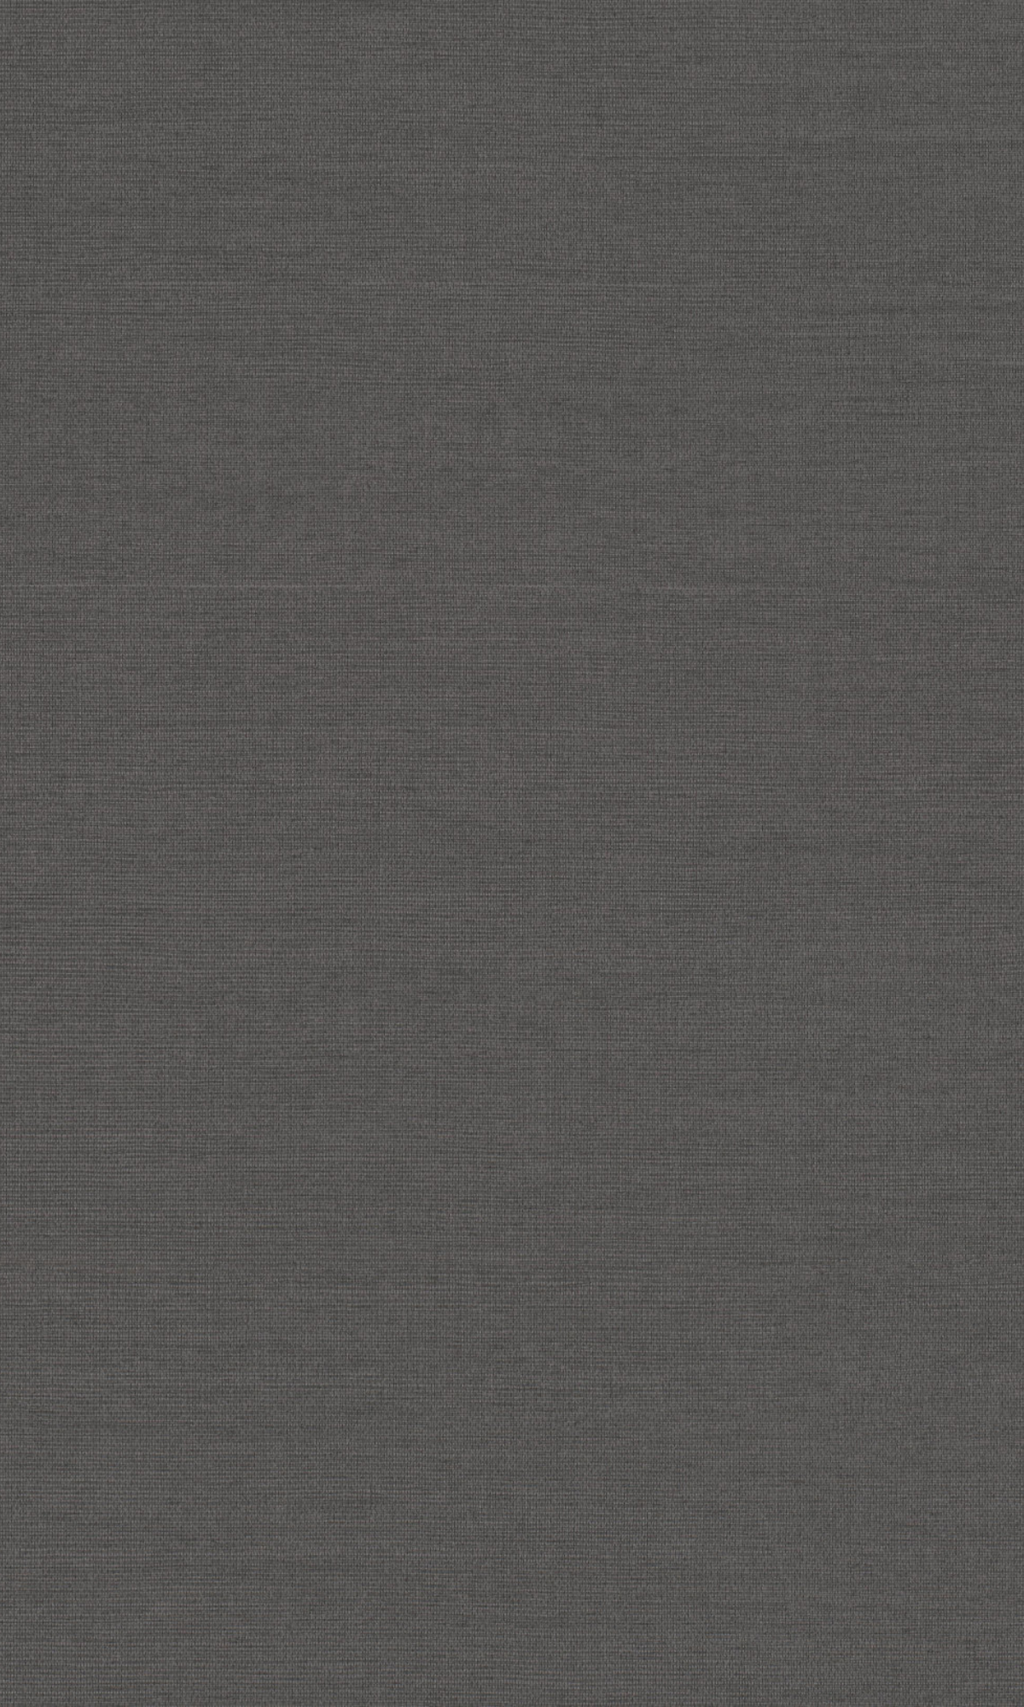 Charcoal Grey Minimalist Textured Vinyl Wallpaper C7255